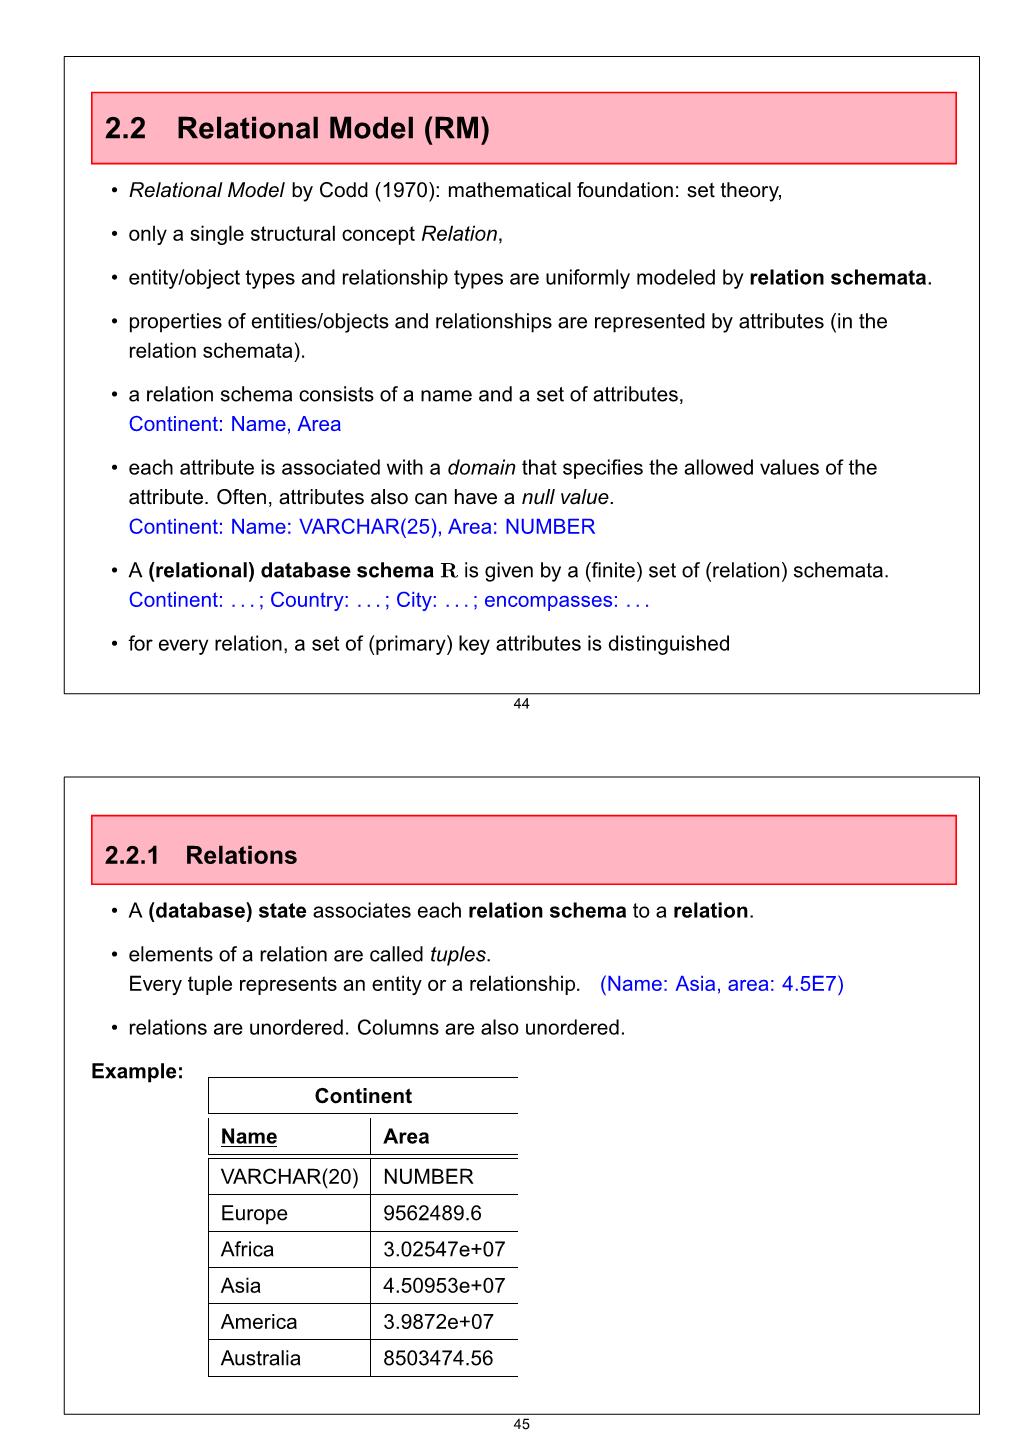 2.2 Relational Model (RM)